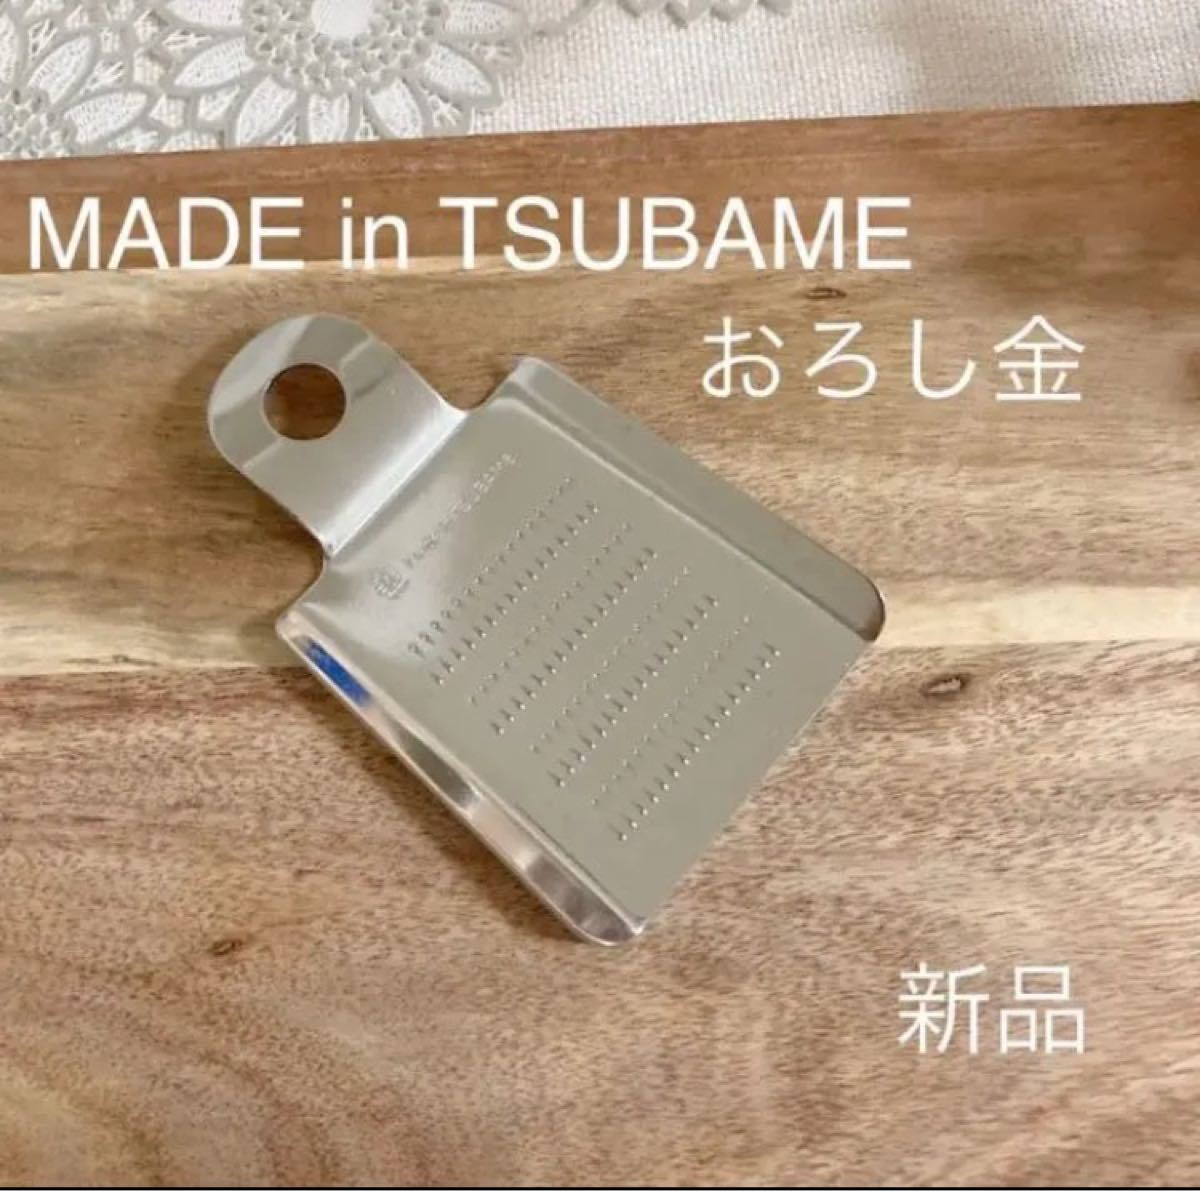 Made in TSUBAMEミニおろし金 新品 薬味おろし器 日本製 新潟県燕市燕三条